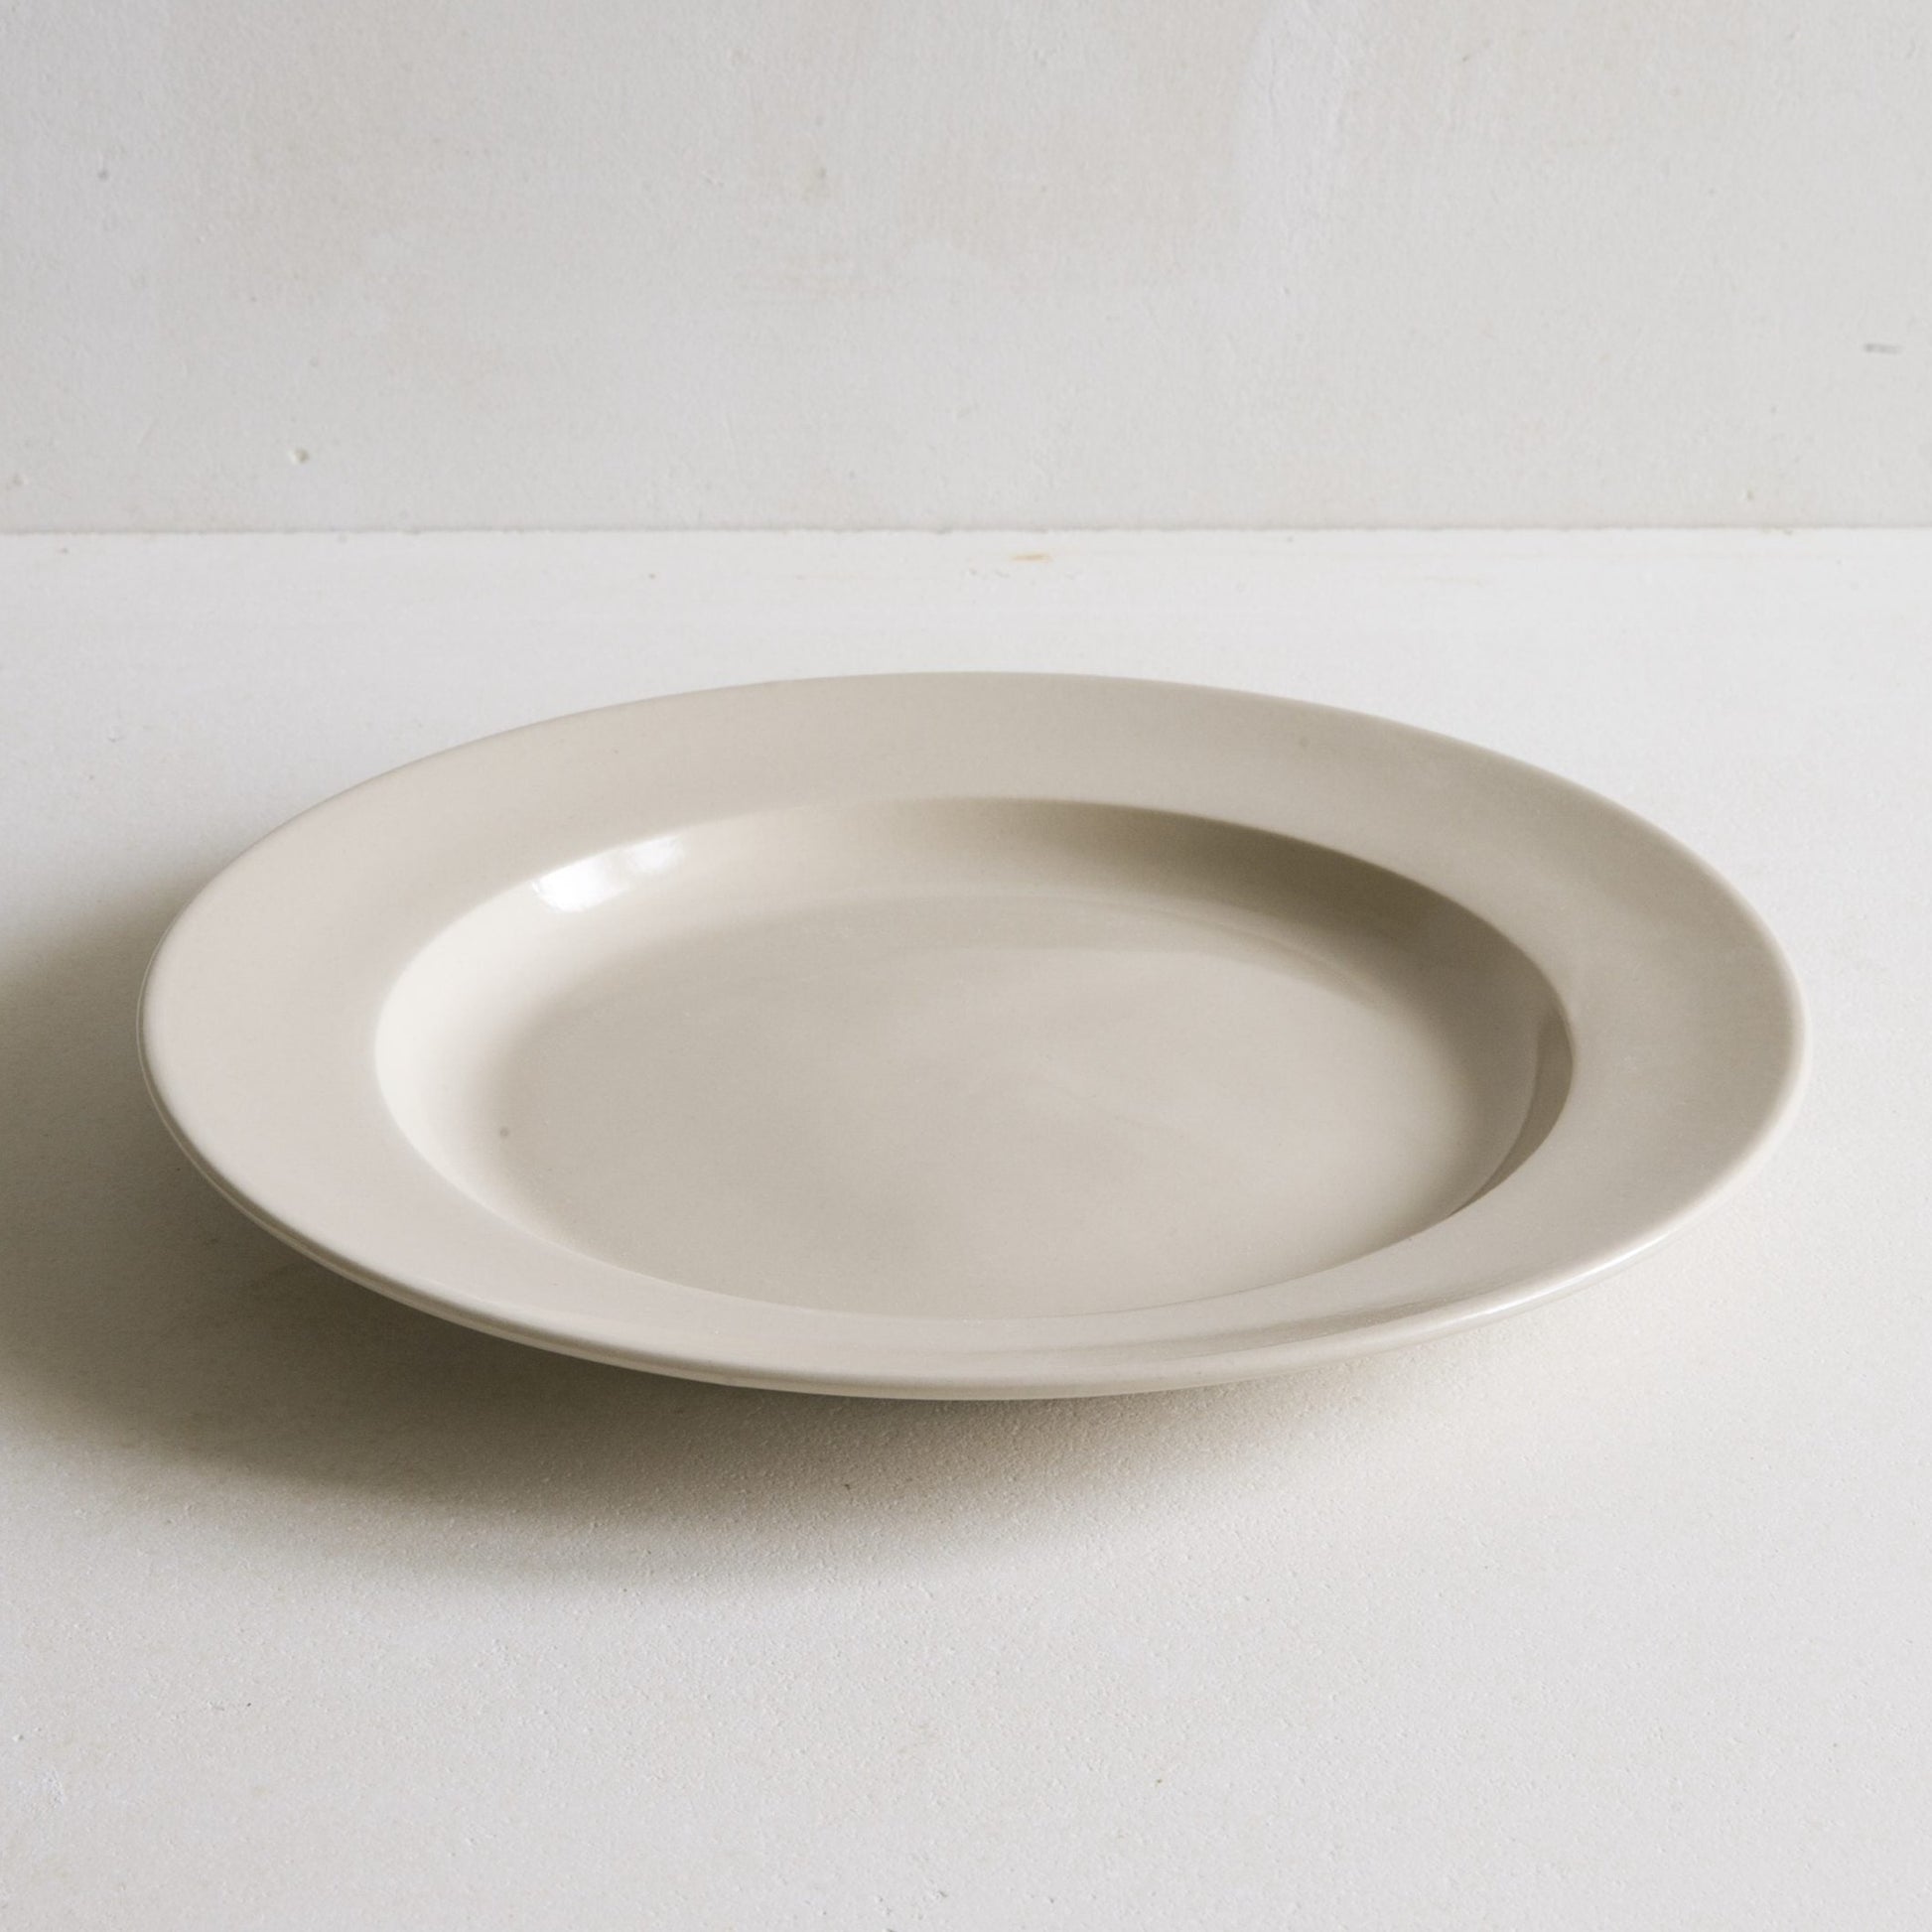 Classical Stoneware Dinner Plate | Luxury Dinnerware | Tableware